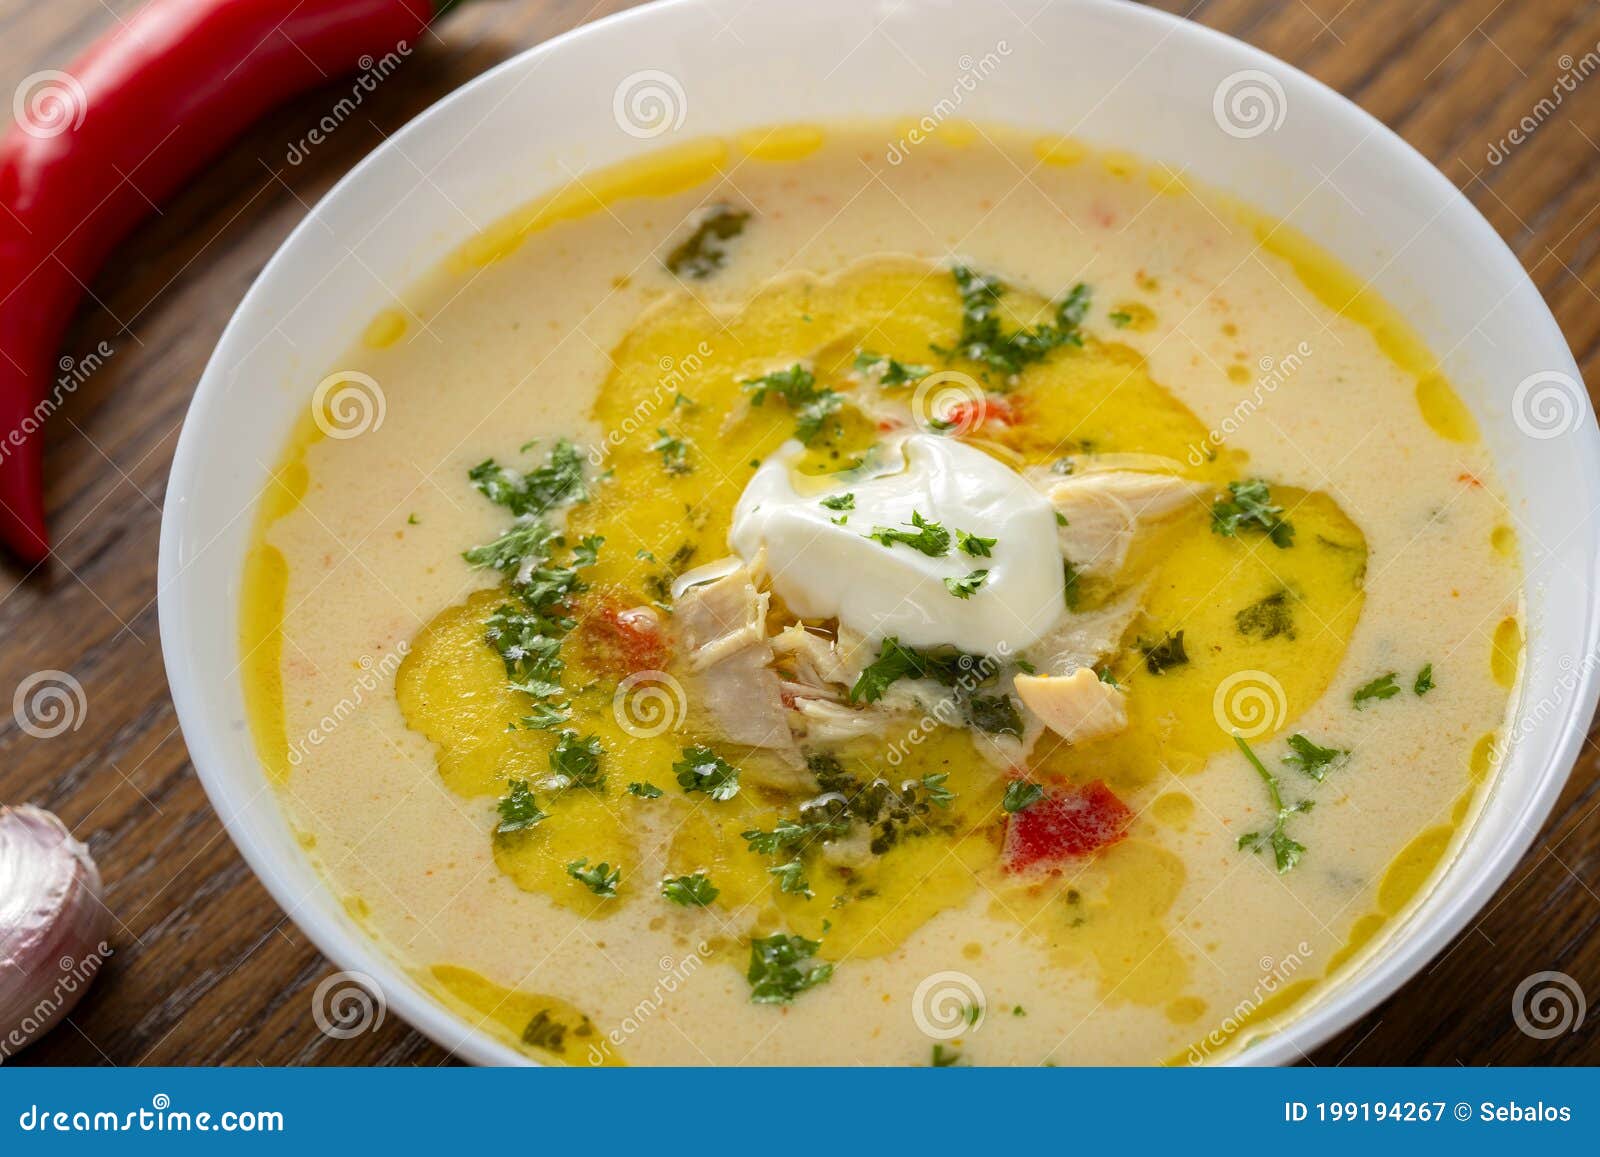 Ciorba Radauteana - Romanian Traditional Soup Stock Image - Image of ...